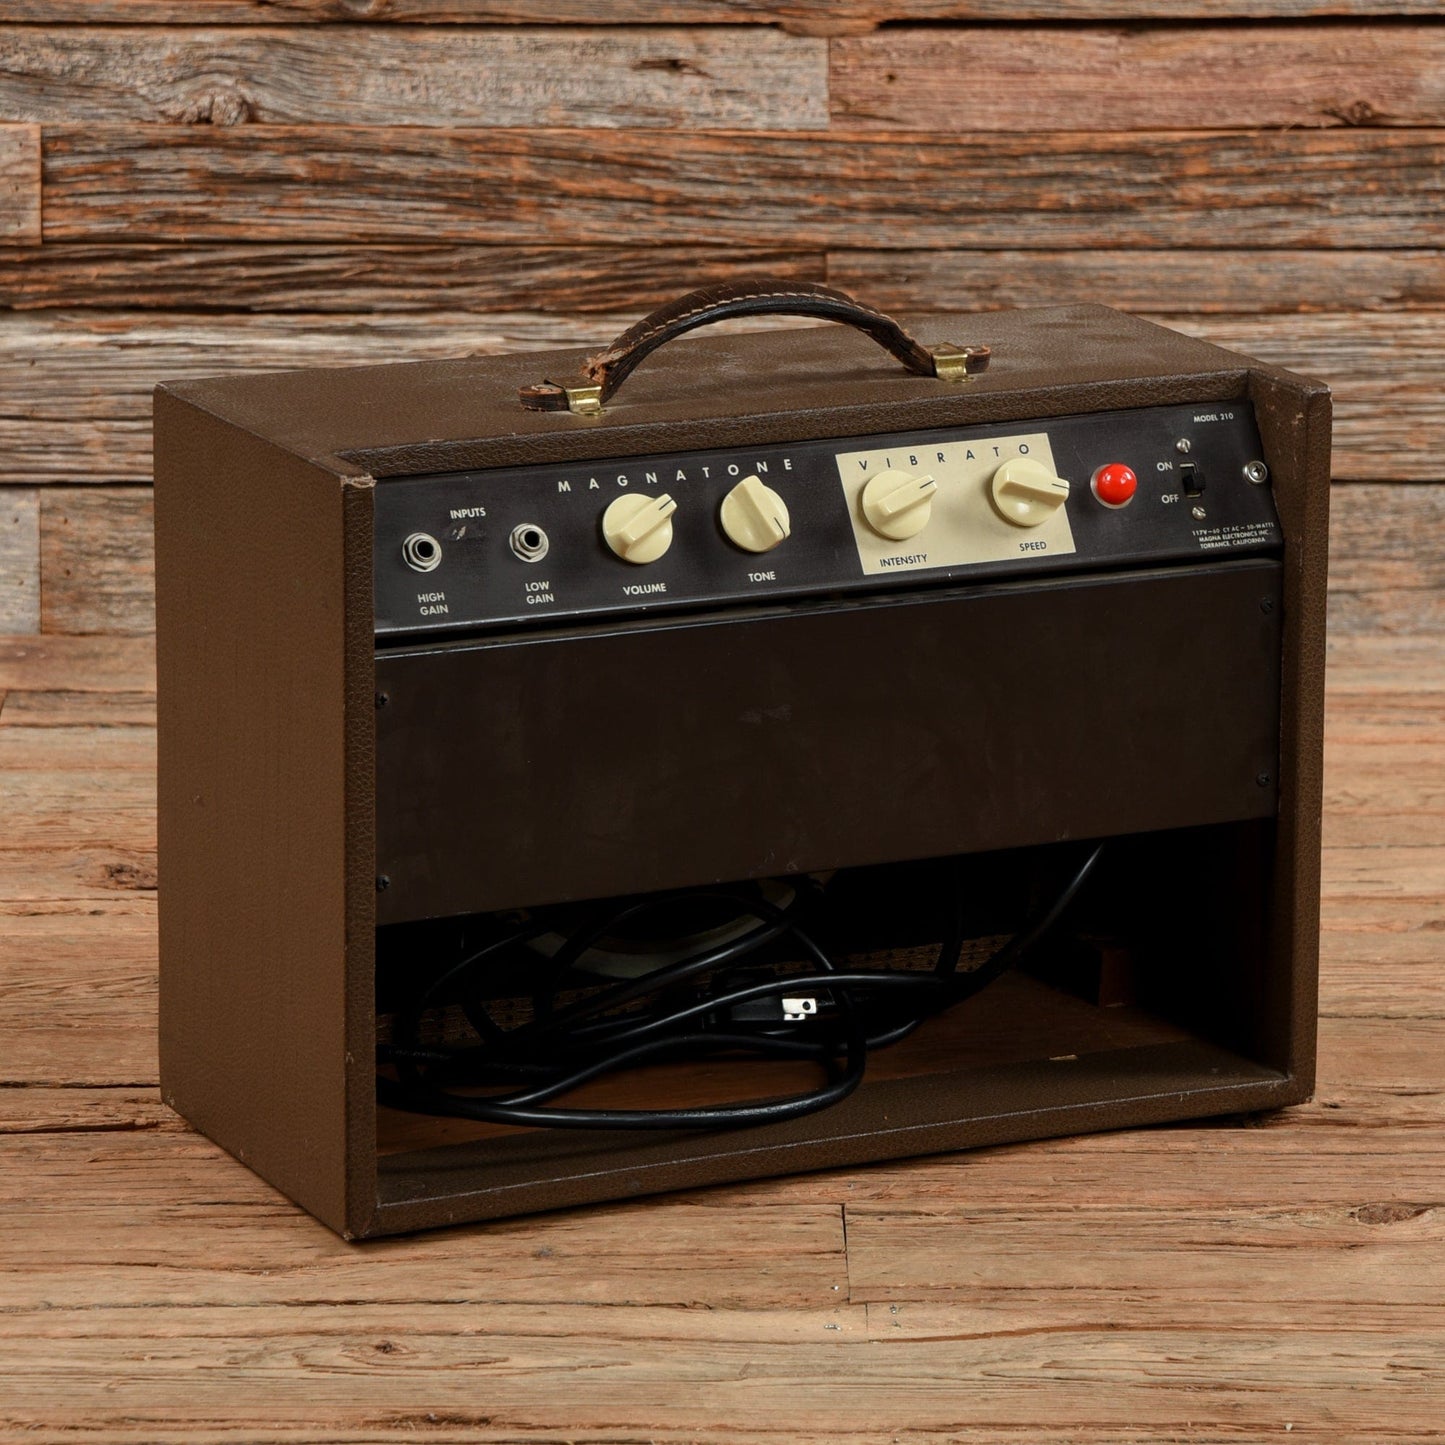 Magnatone Model 210 5-Watt 1x8" Guitar Combo Amp  1959 Amps / Guitar Cabinets